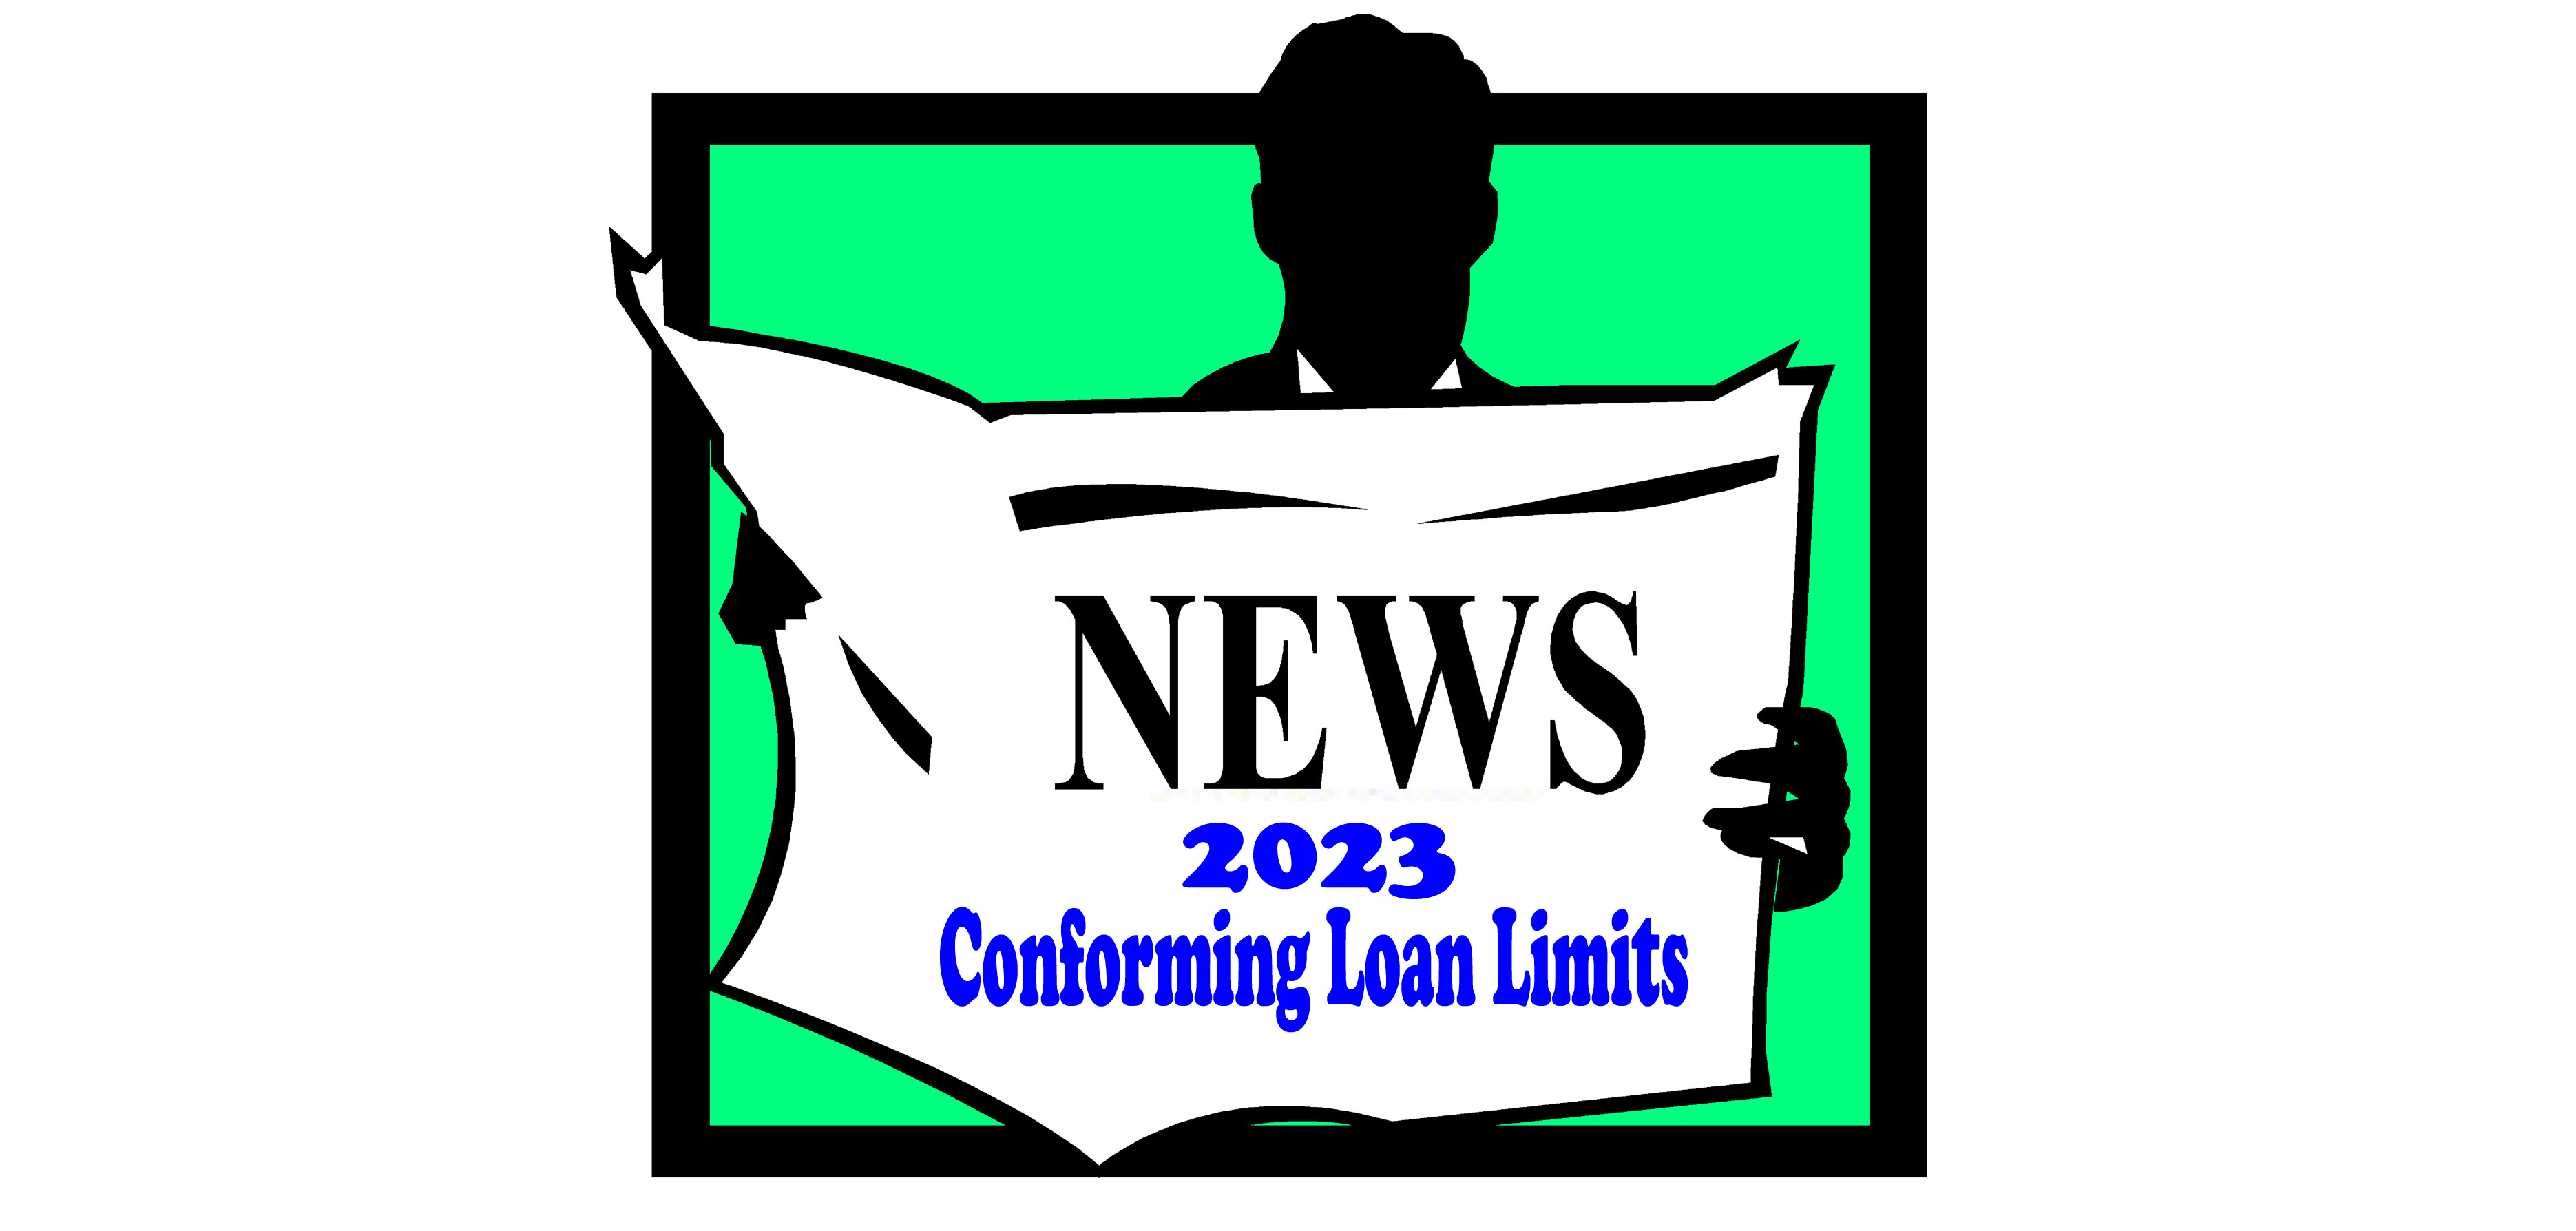 News_-_2023_Conforming_Loan_Limits.jpg